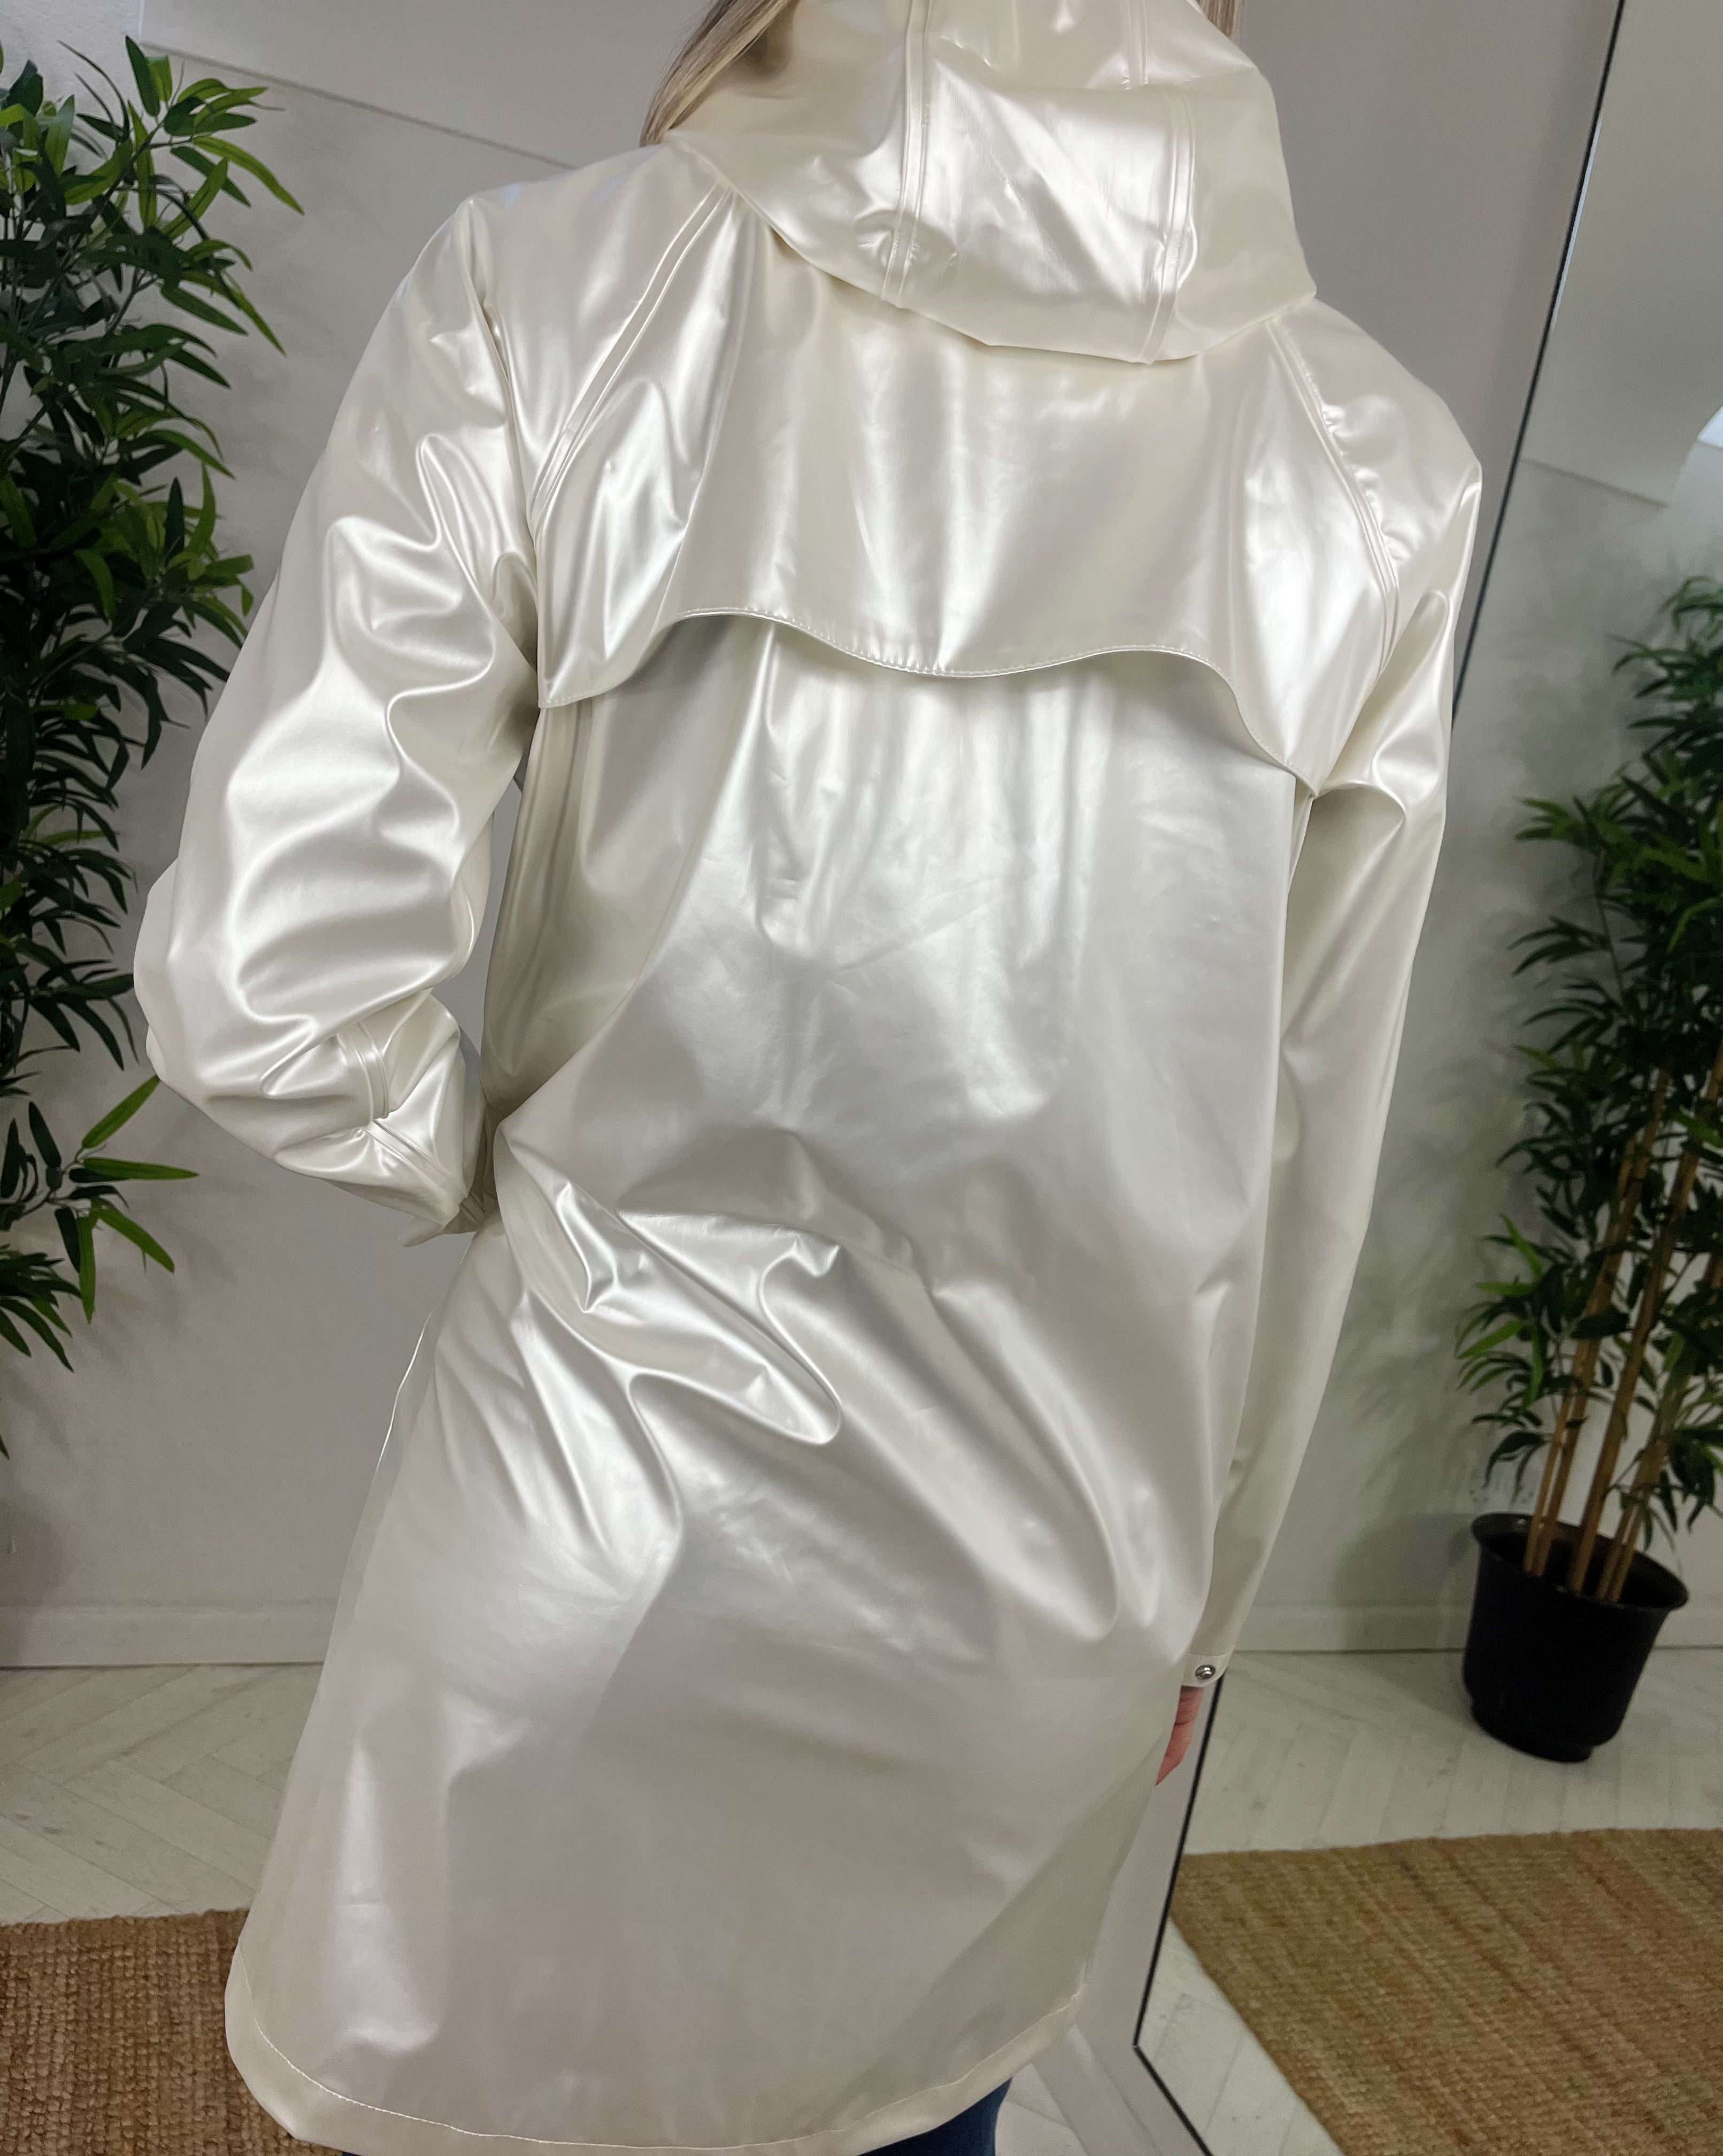 ICHI Pearl Mid Length Raincoat - Dusty Silver